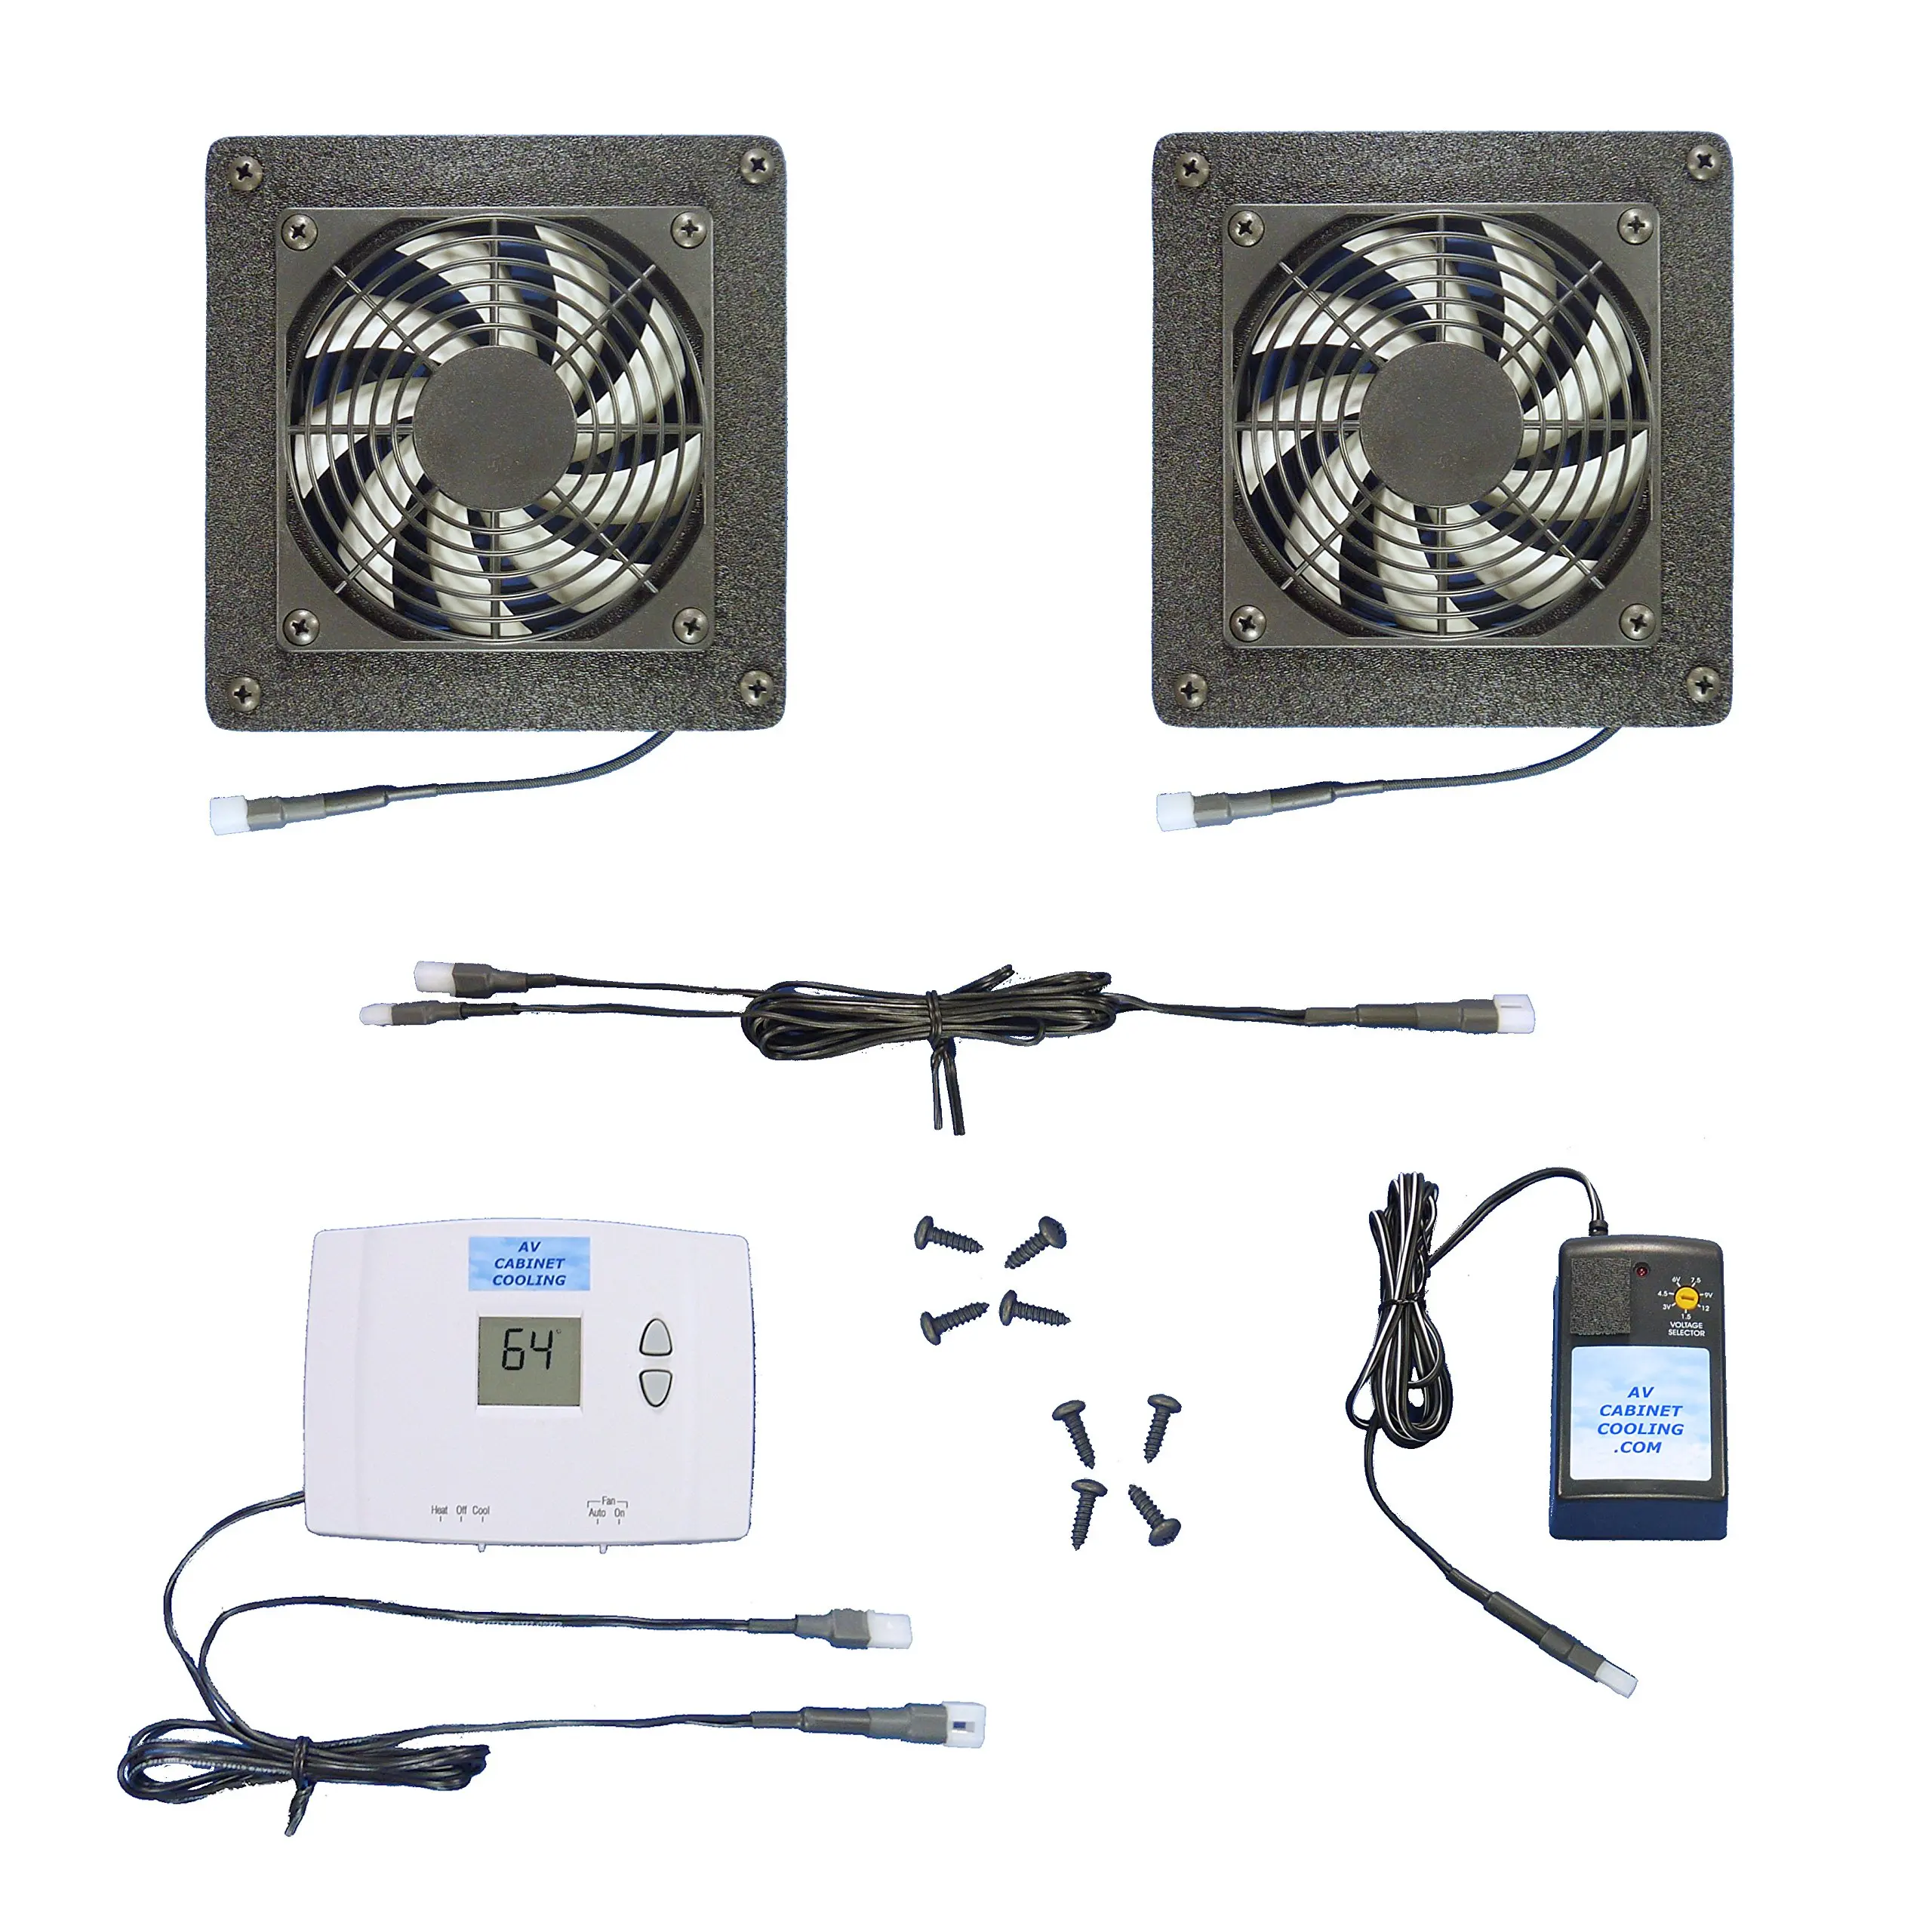 Buy 2-Zone AV cabinet cooling fans / Digital thermostat / multi-speed